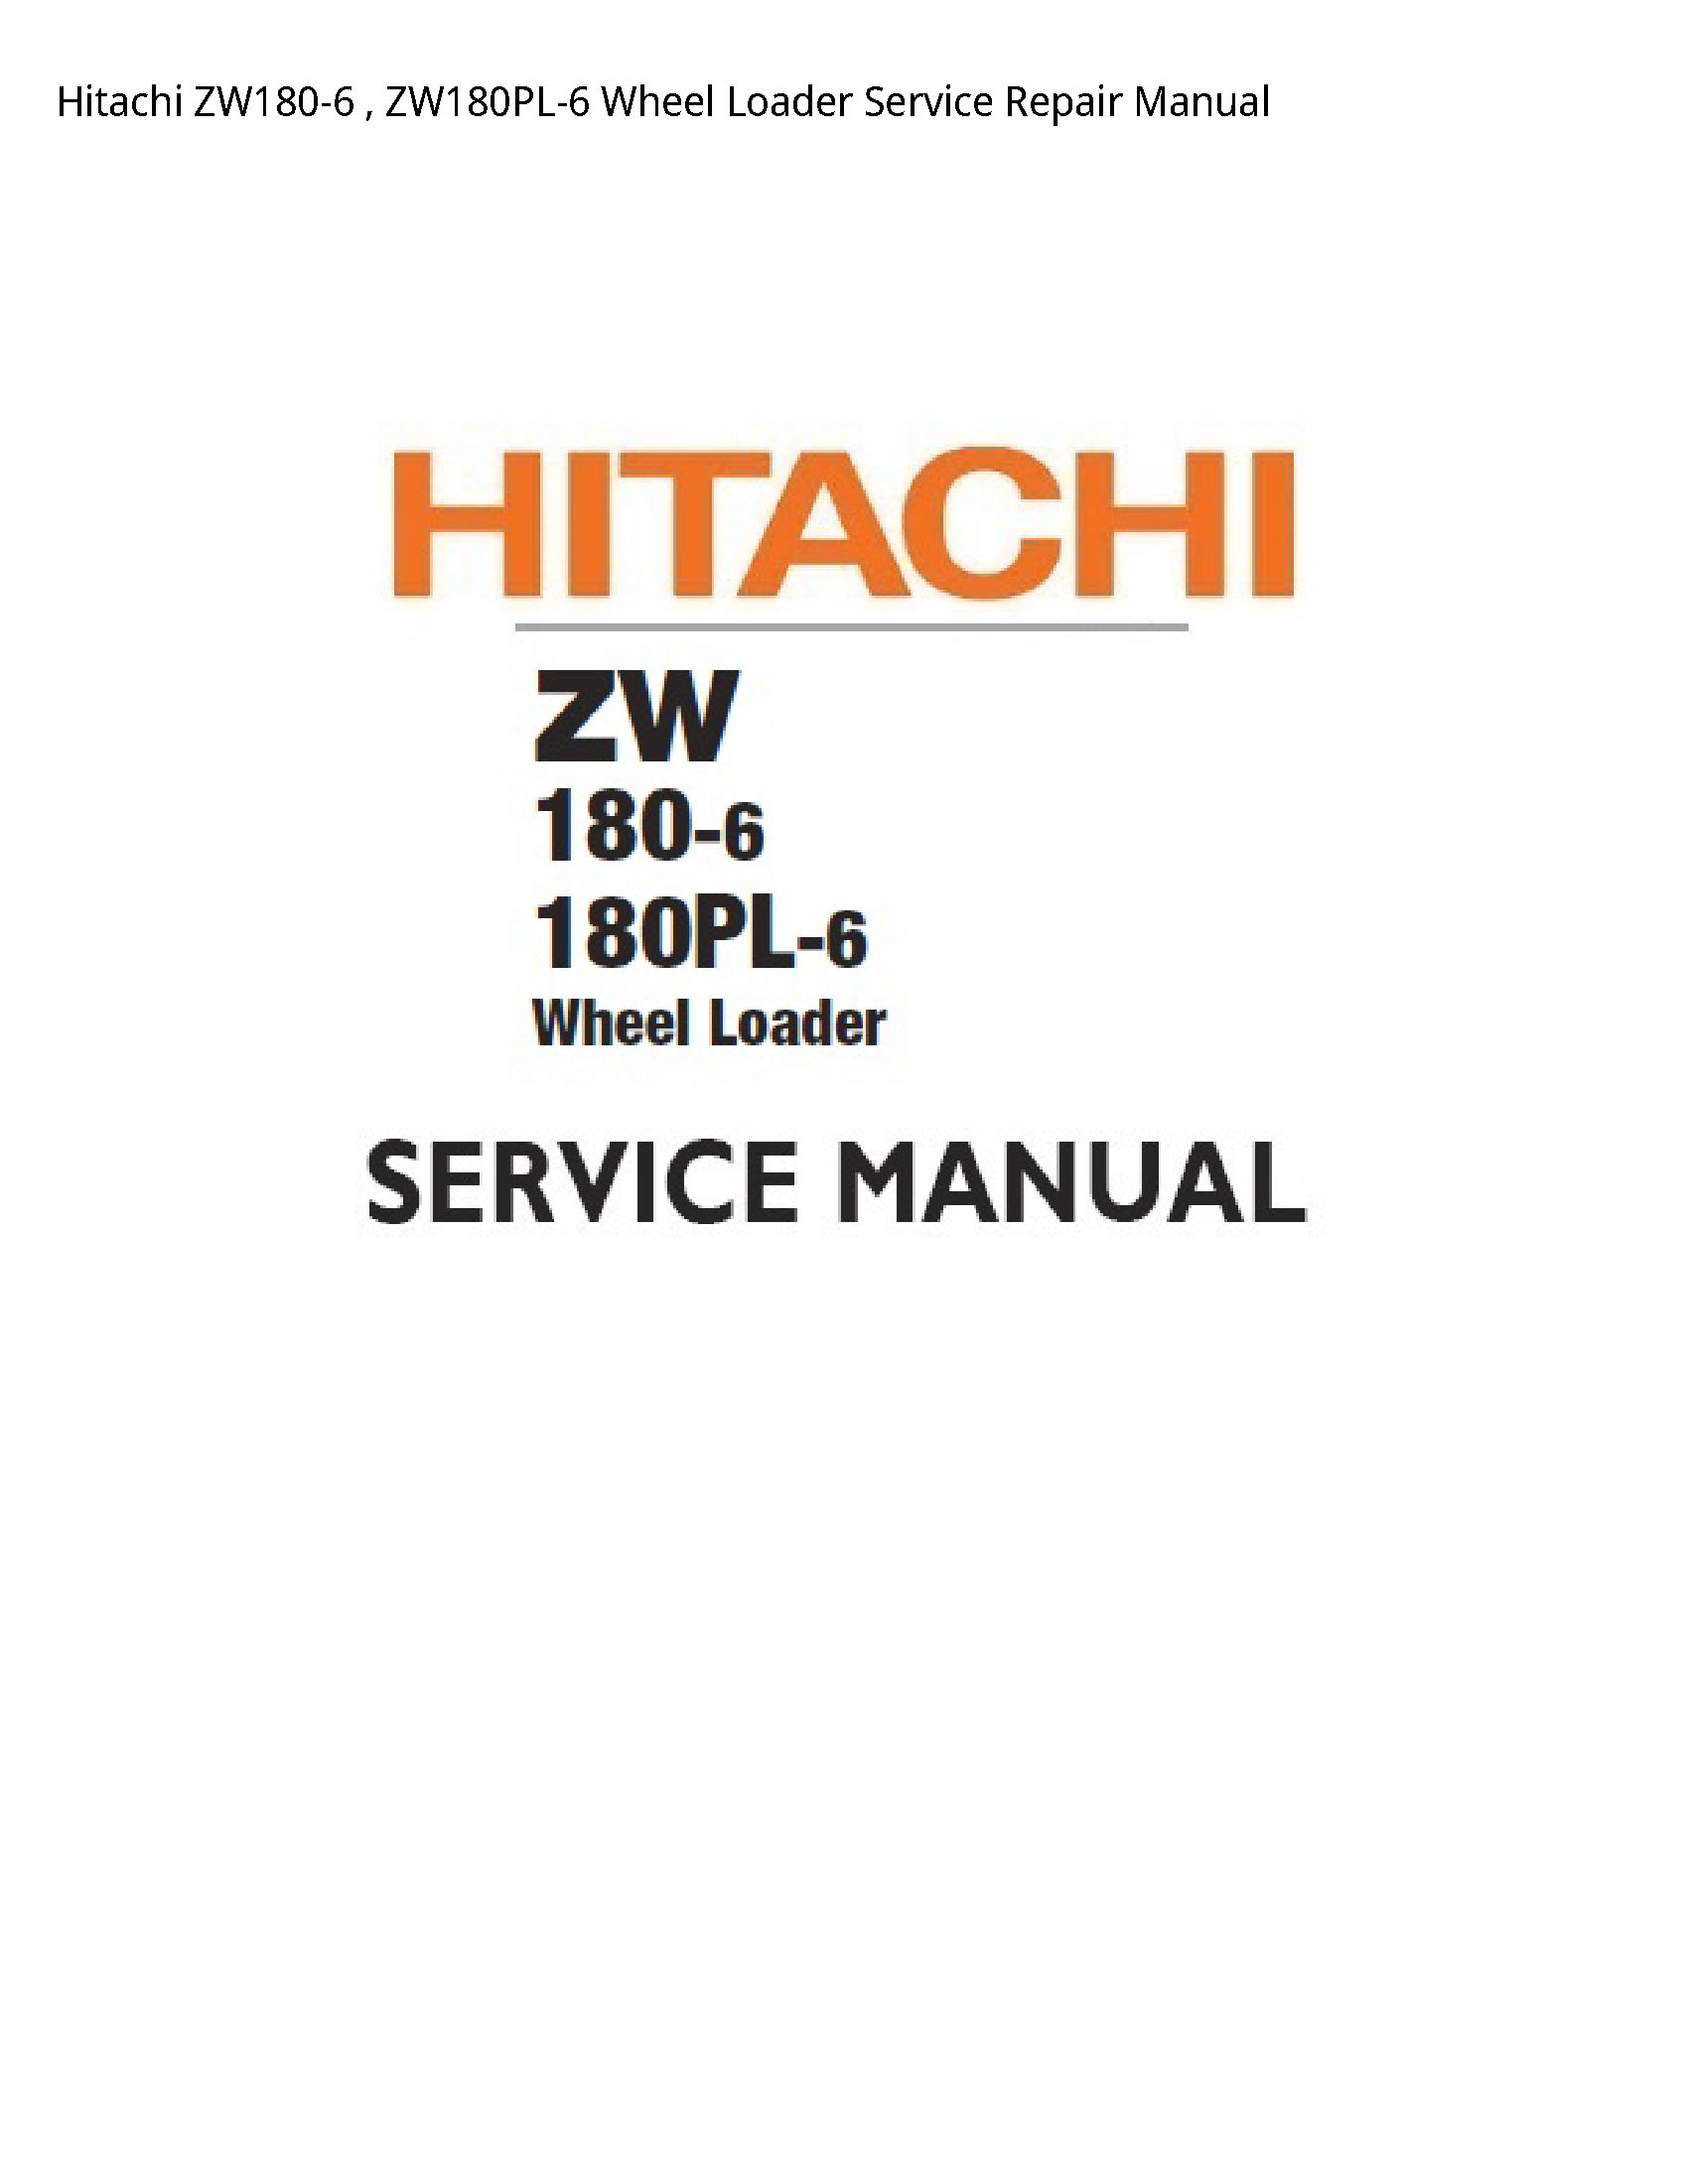 Hitachi ZW180-6 Wheel Loader manual